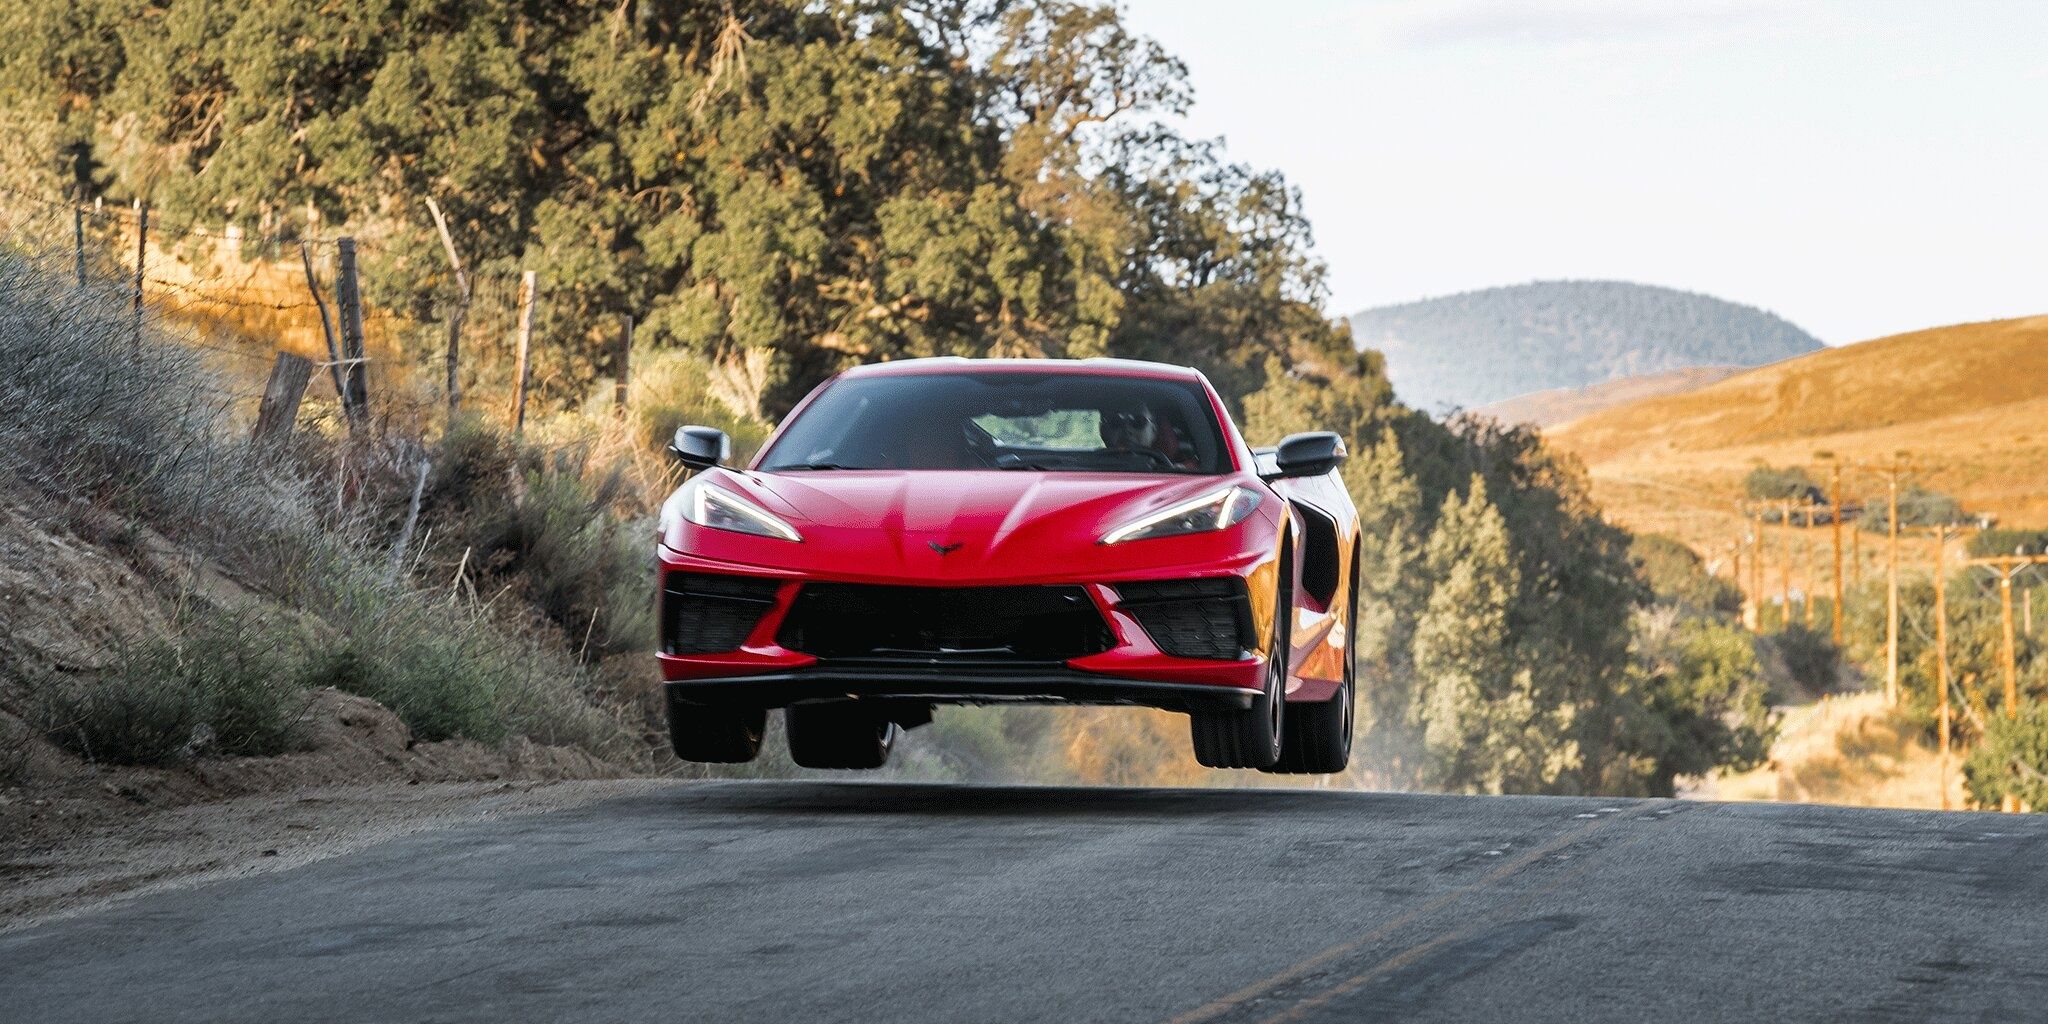 The 2020 C8 Corvette making an astonishing speed jump